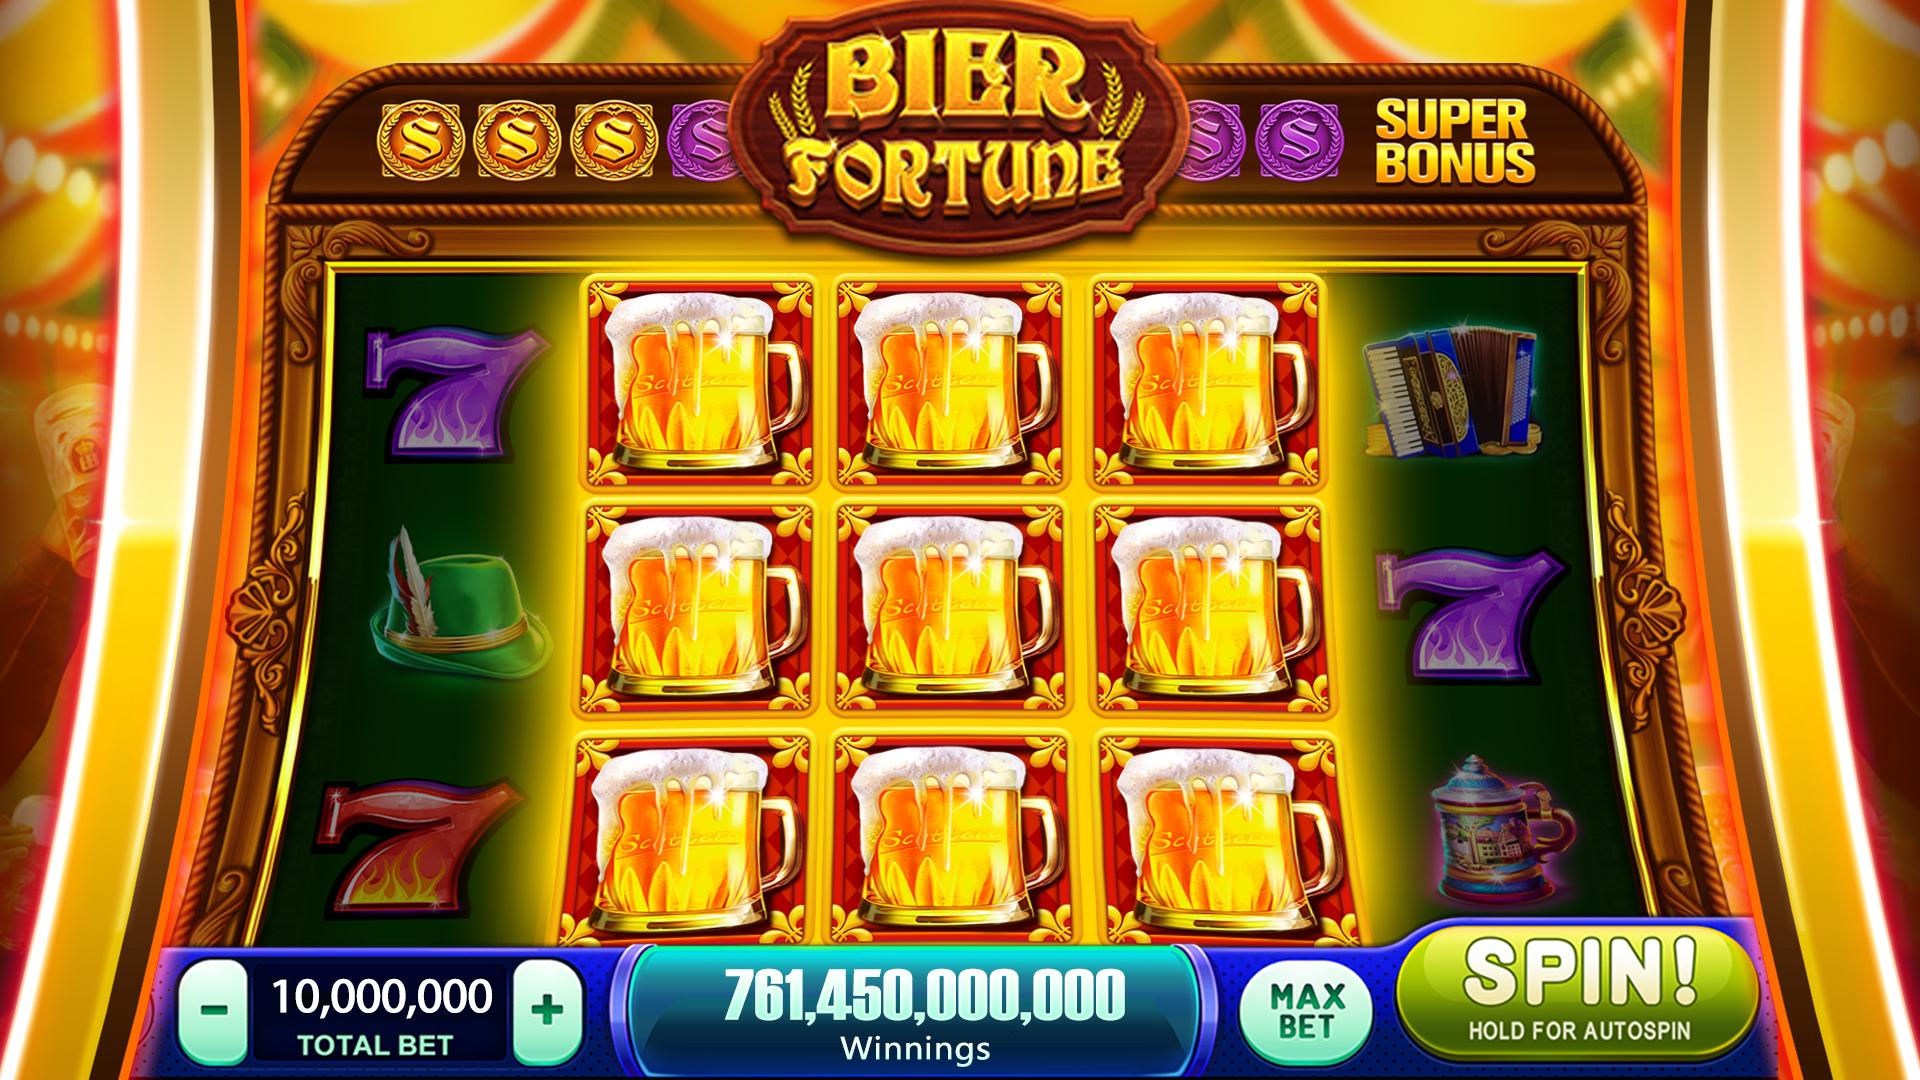 Double Win Casino Slots - Free Video Slots Games 1.61 Screenshot 1